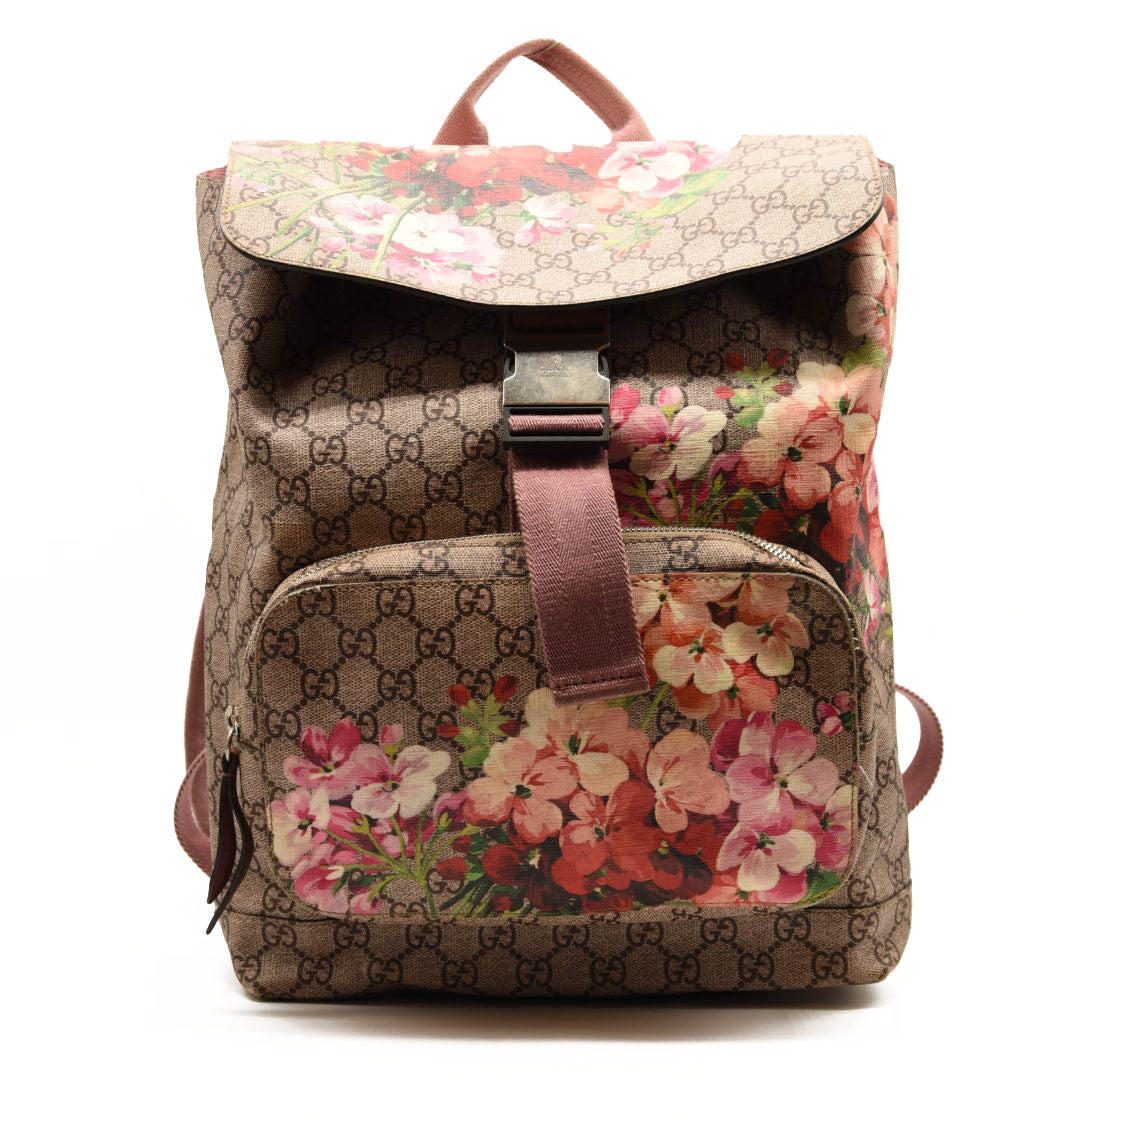 Gucci Backpack Bag GG Supreme Canvas Trolley Beige